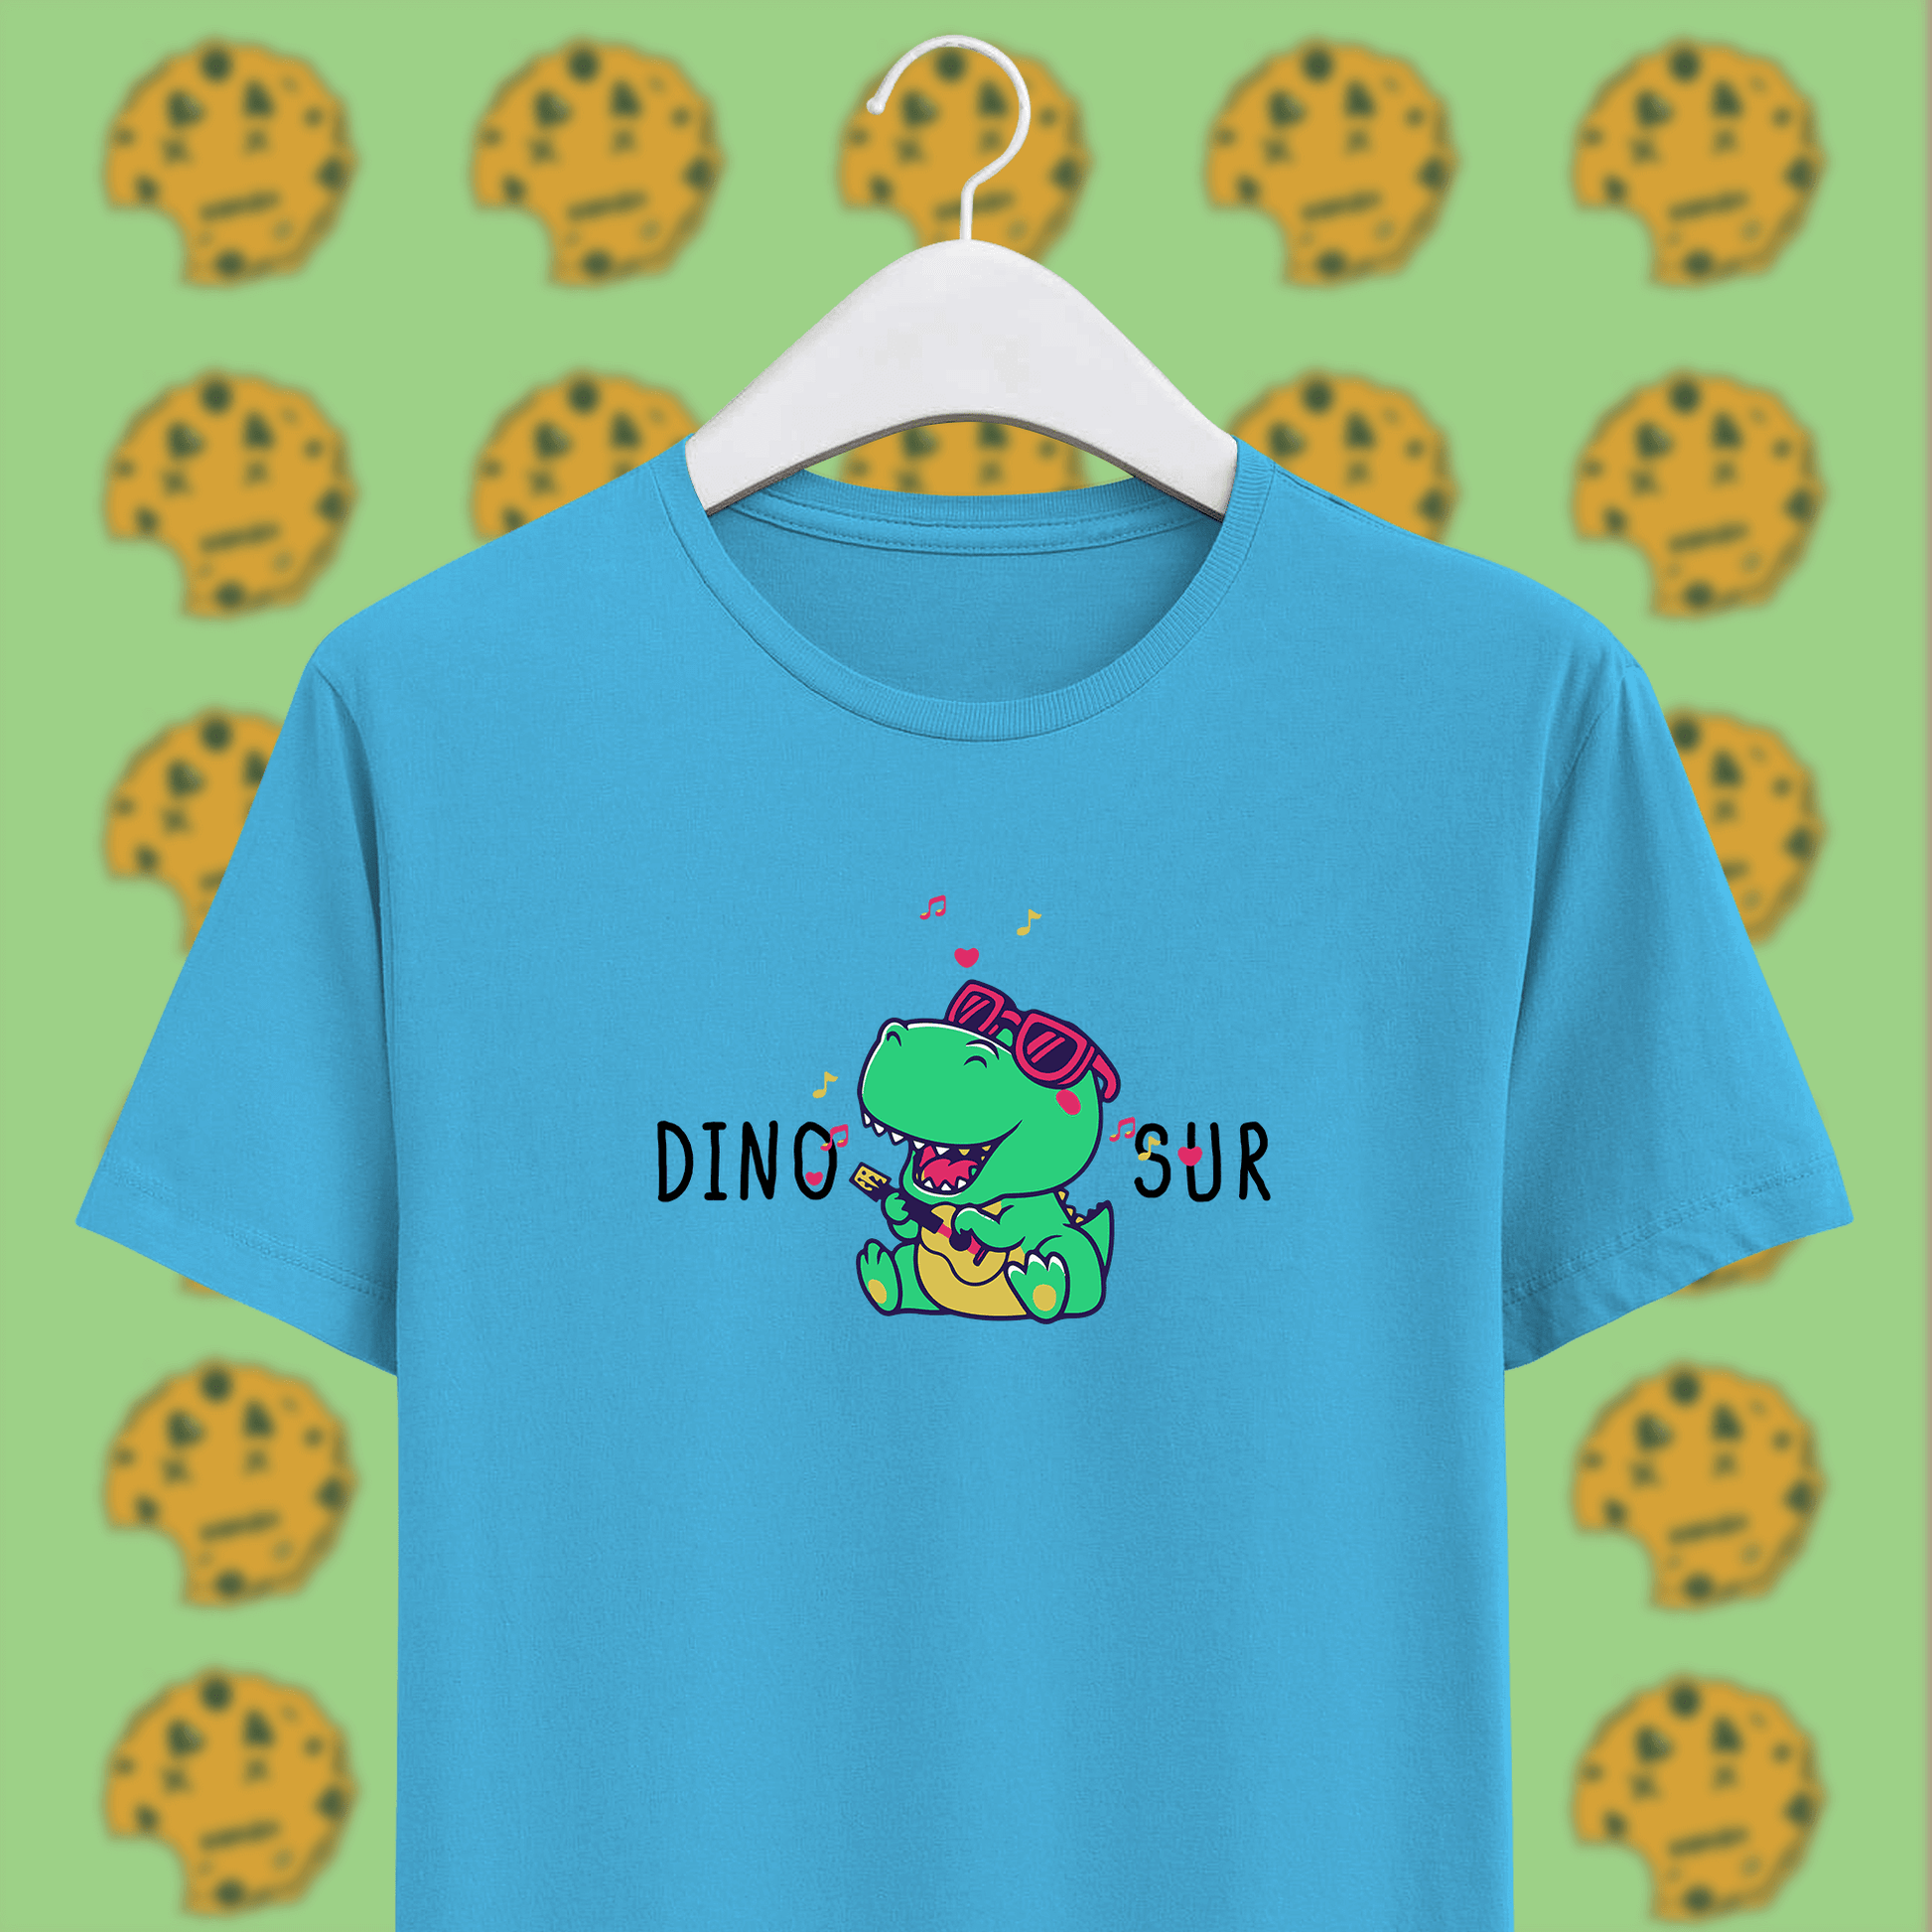 singing dinosaur on sky blue unisex cotton t-shirt, funny pun 